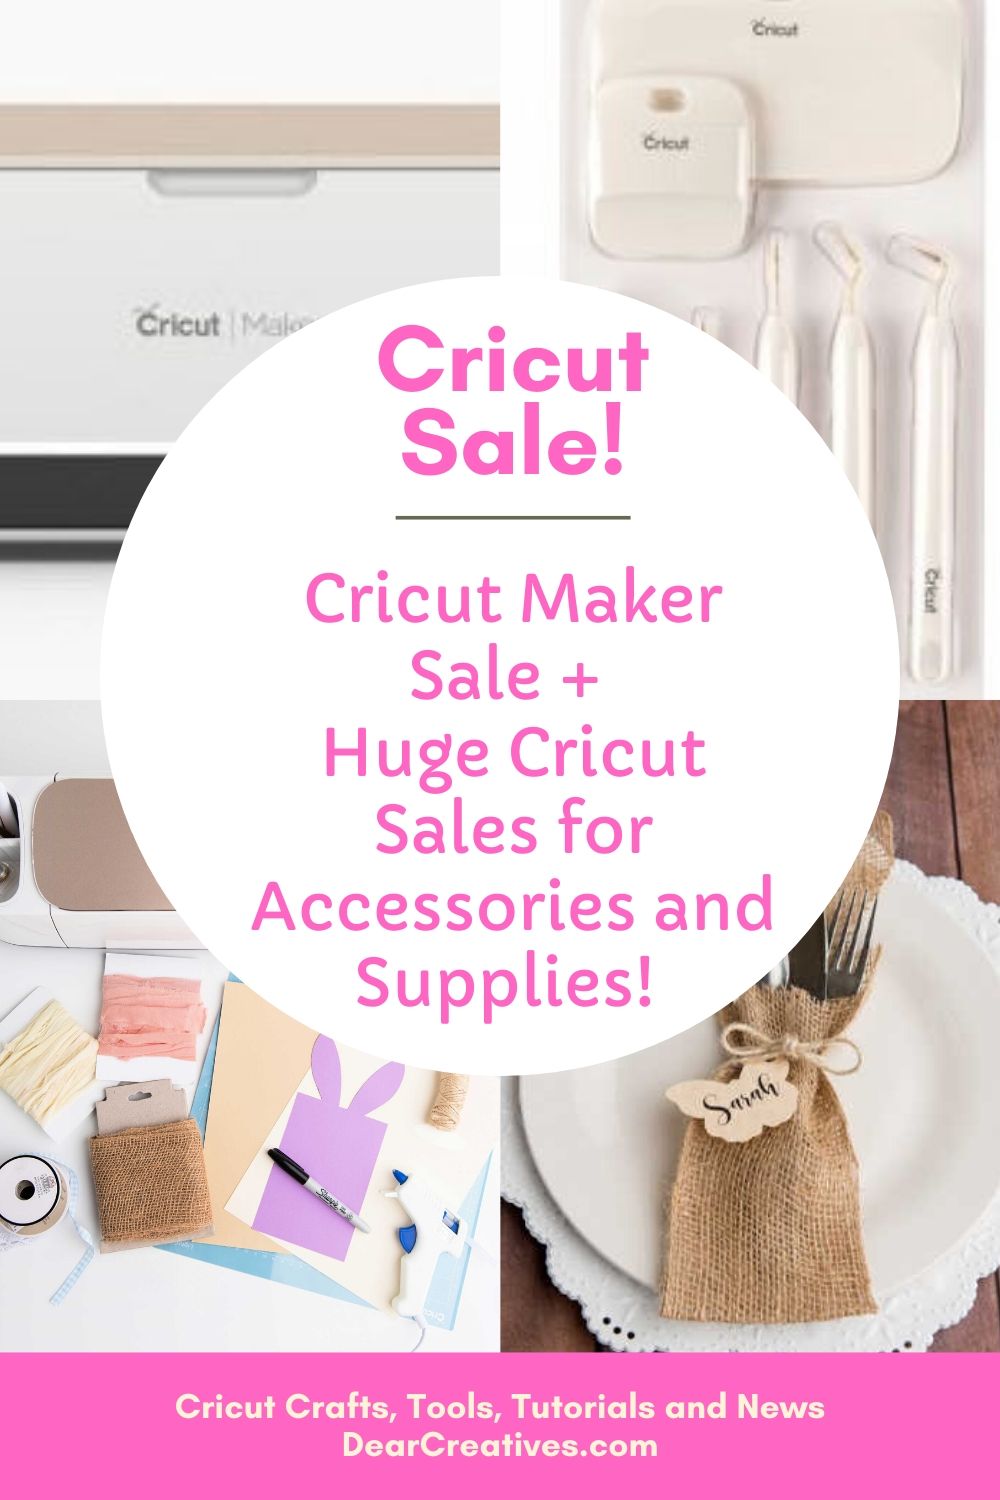 Cricut Maker Sale! + Cricut Sale Materials And Accessories - Dear